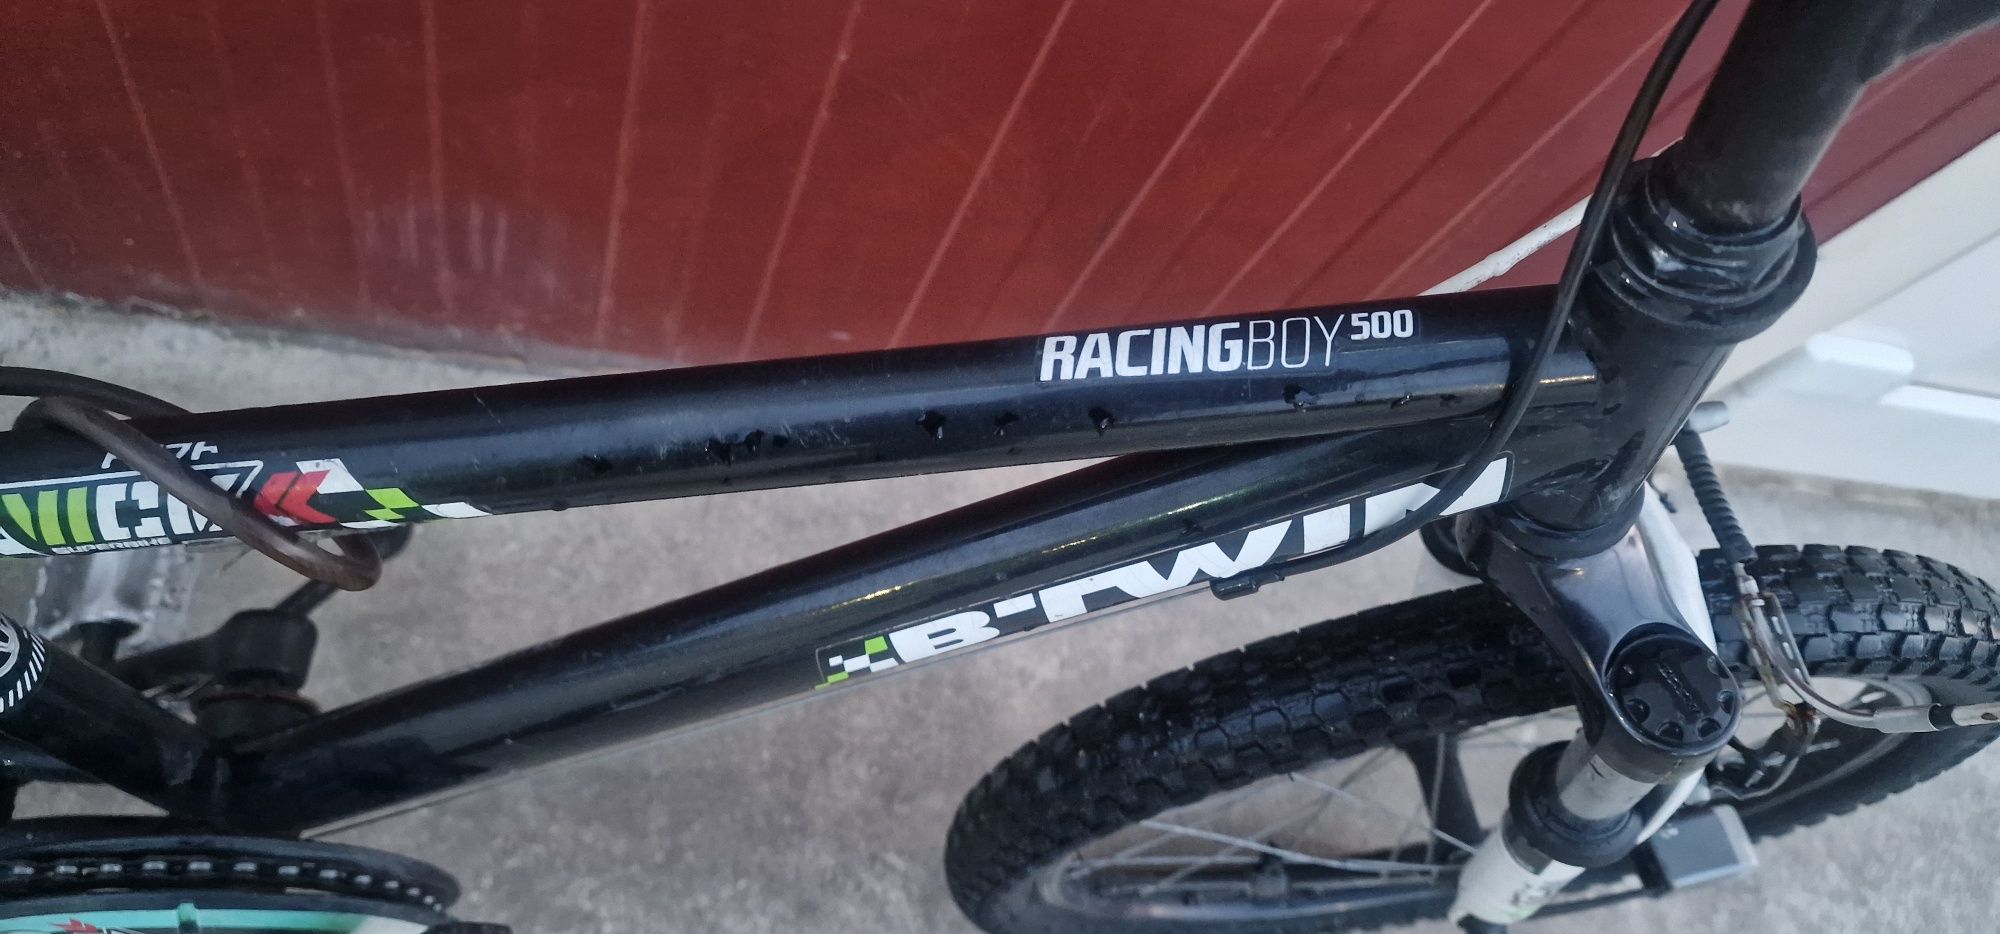 Bicicleta Btwin Racing Boy 500